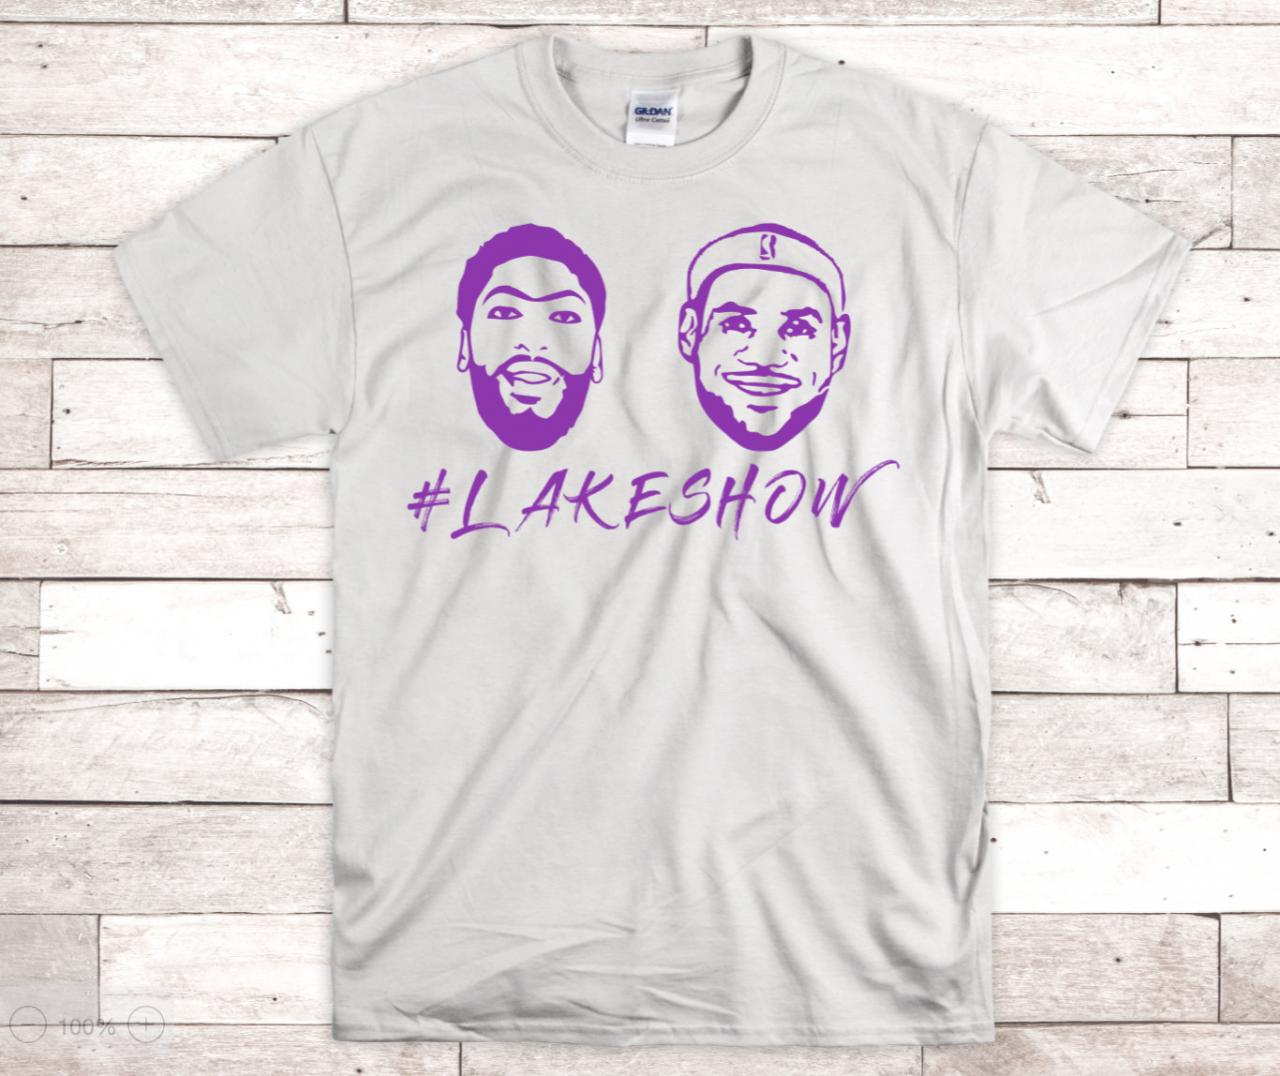 Anthony Davis And Lebron James Shirt - Ad And Lbj Shirt - Lakers Shirt - Lakeshow Shirt - Anthony Davis Shirt - Lakers Shirt